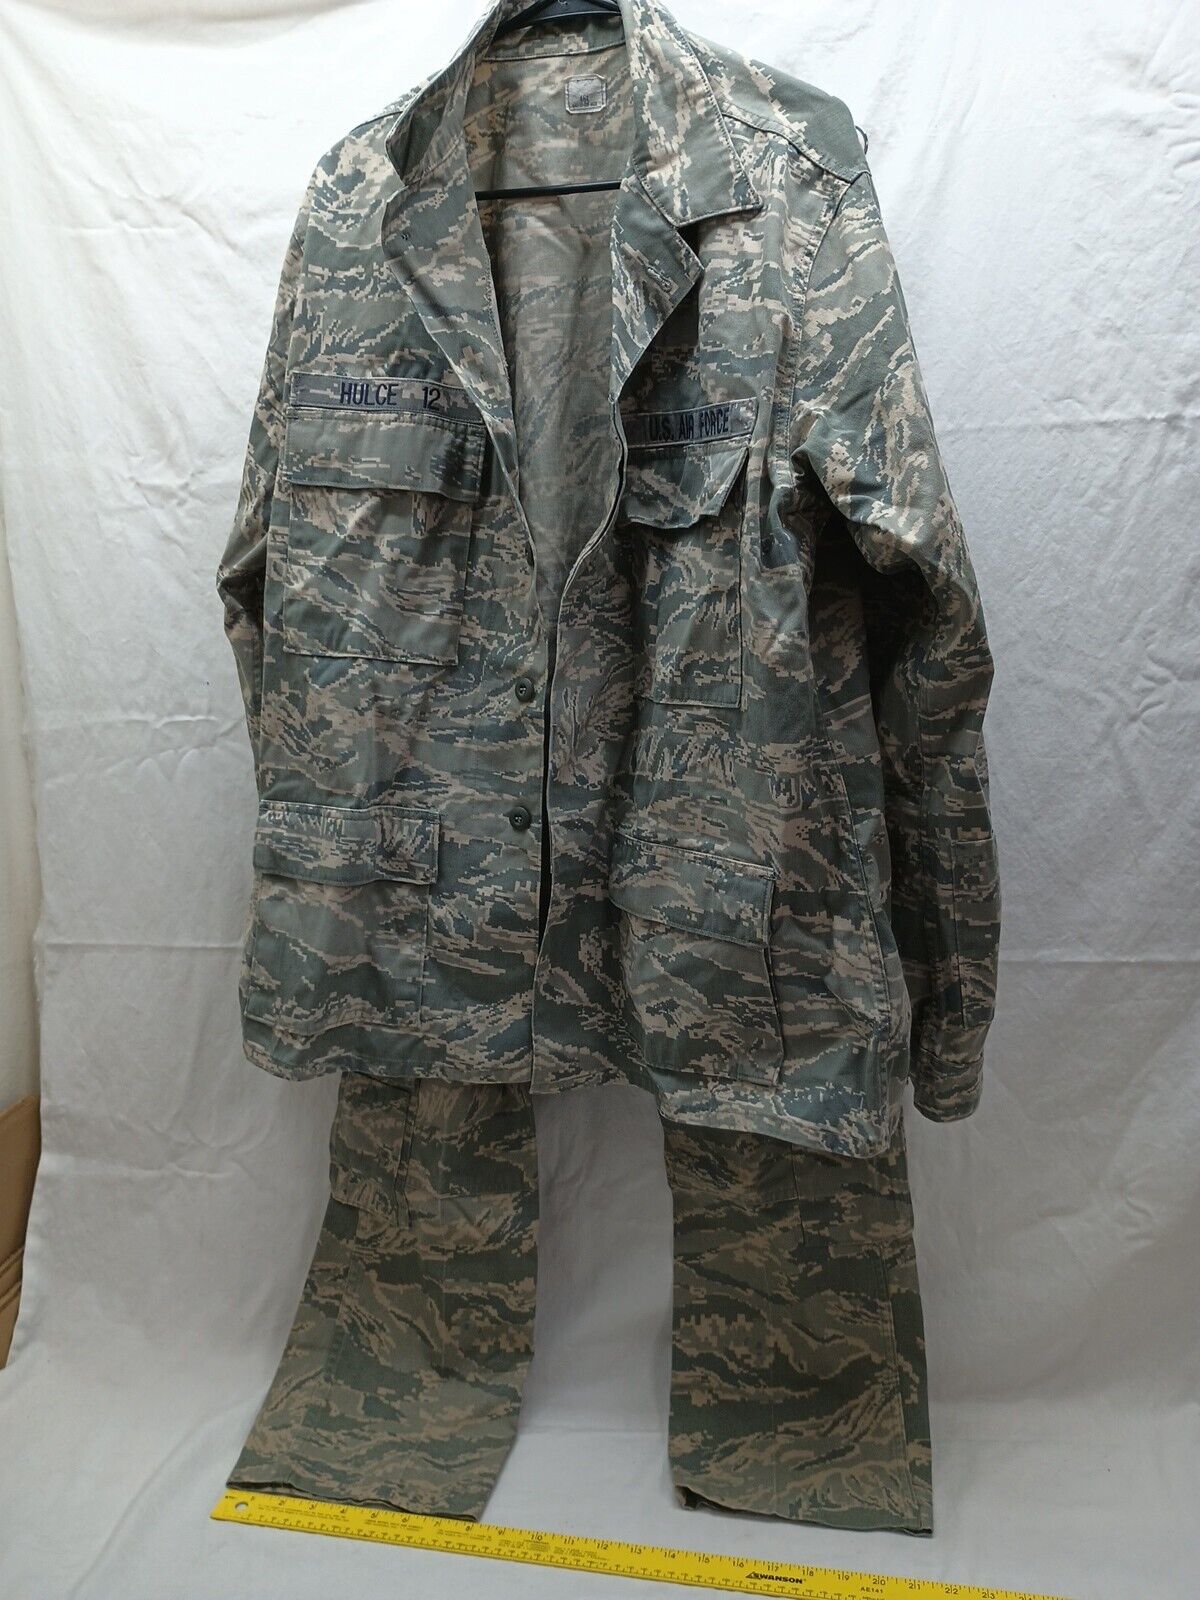 US NATO Military Camouflage Uniform Pants And Shirt